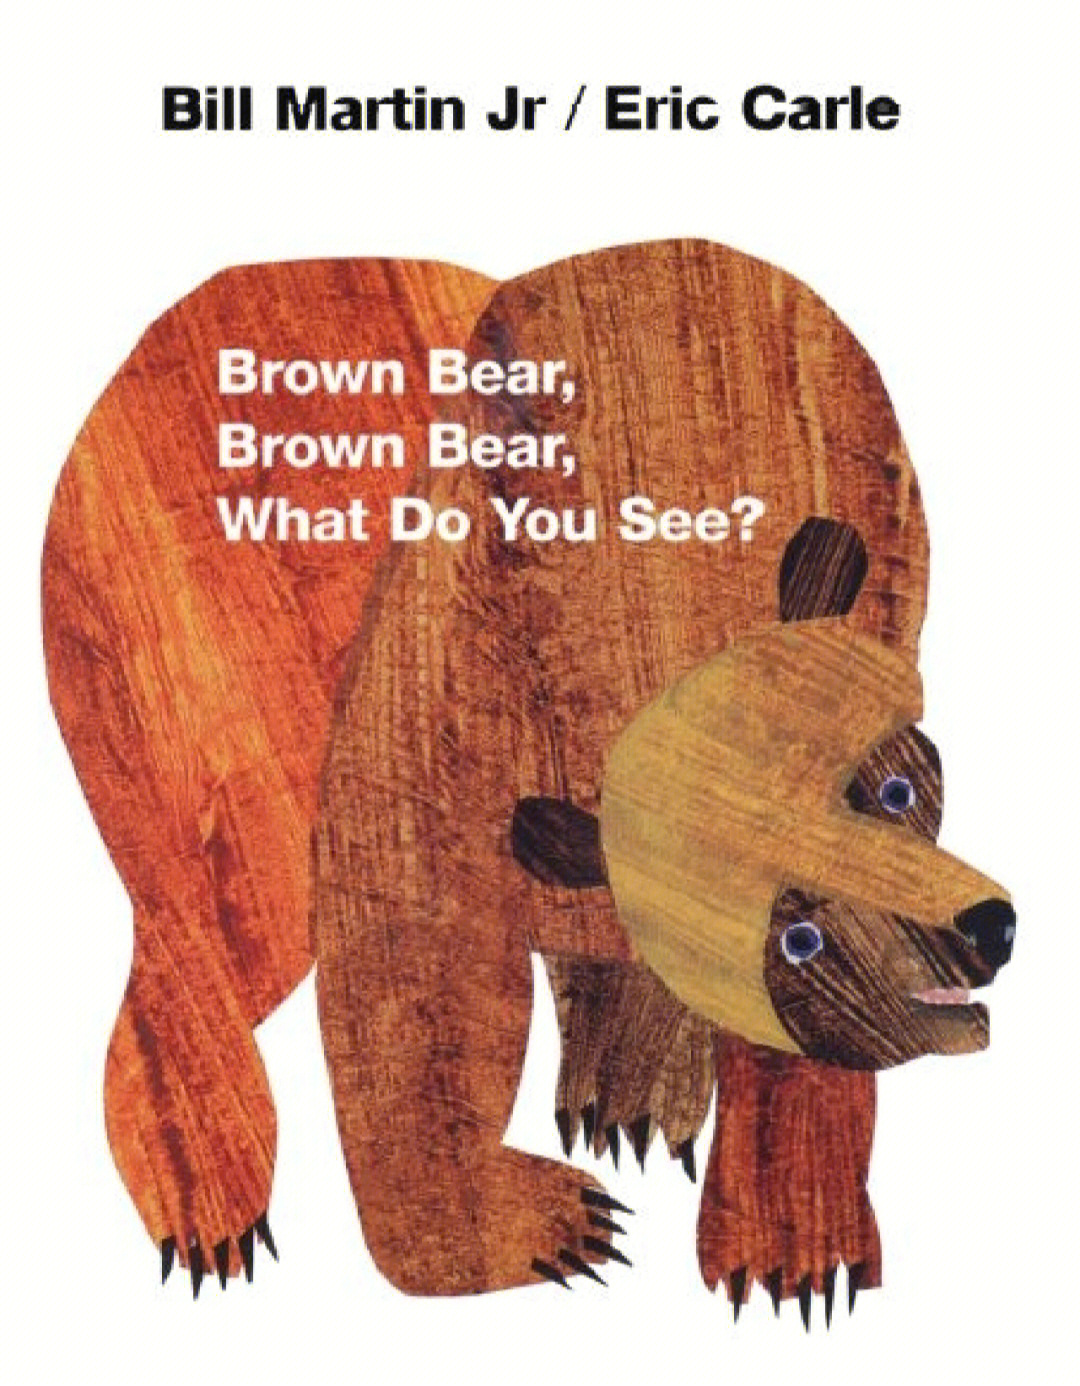 brownbear简笔画图片